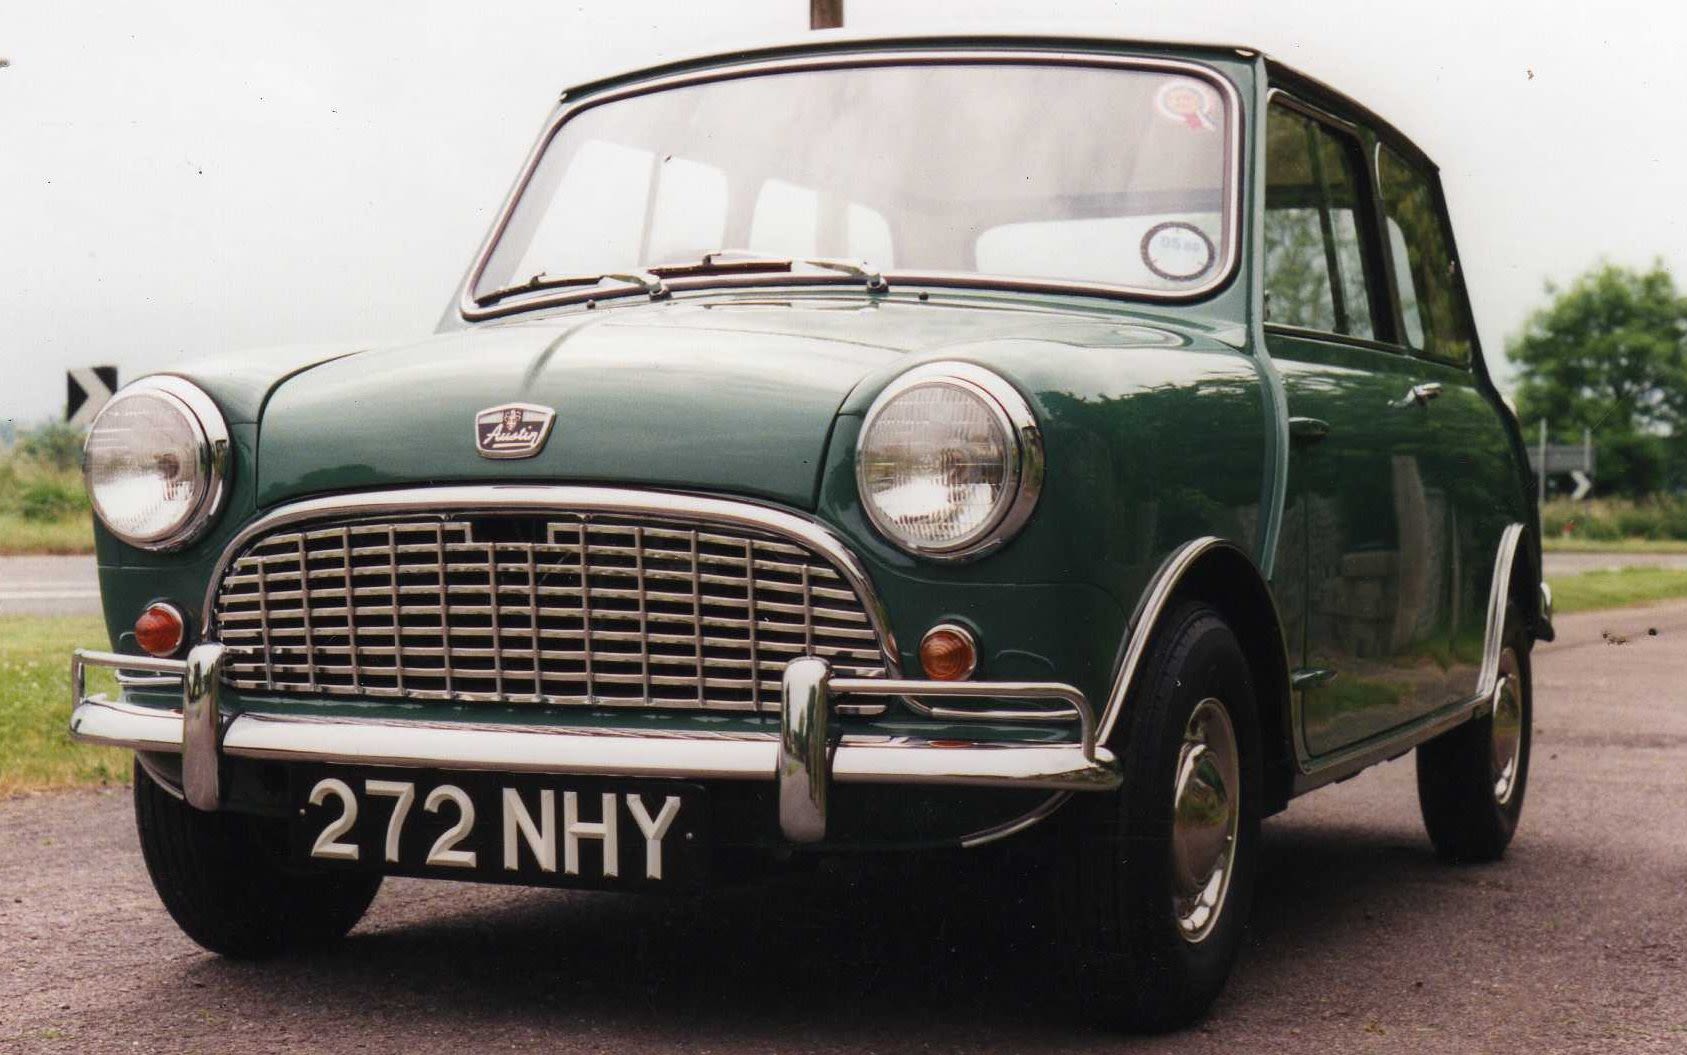 UK’s rarest cars: 1961 Austin Super Seven, one of only 36 left